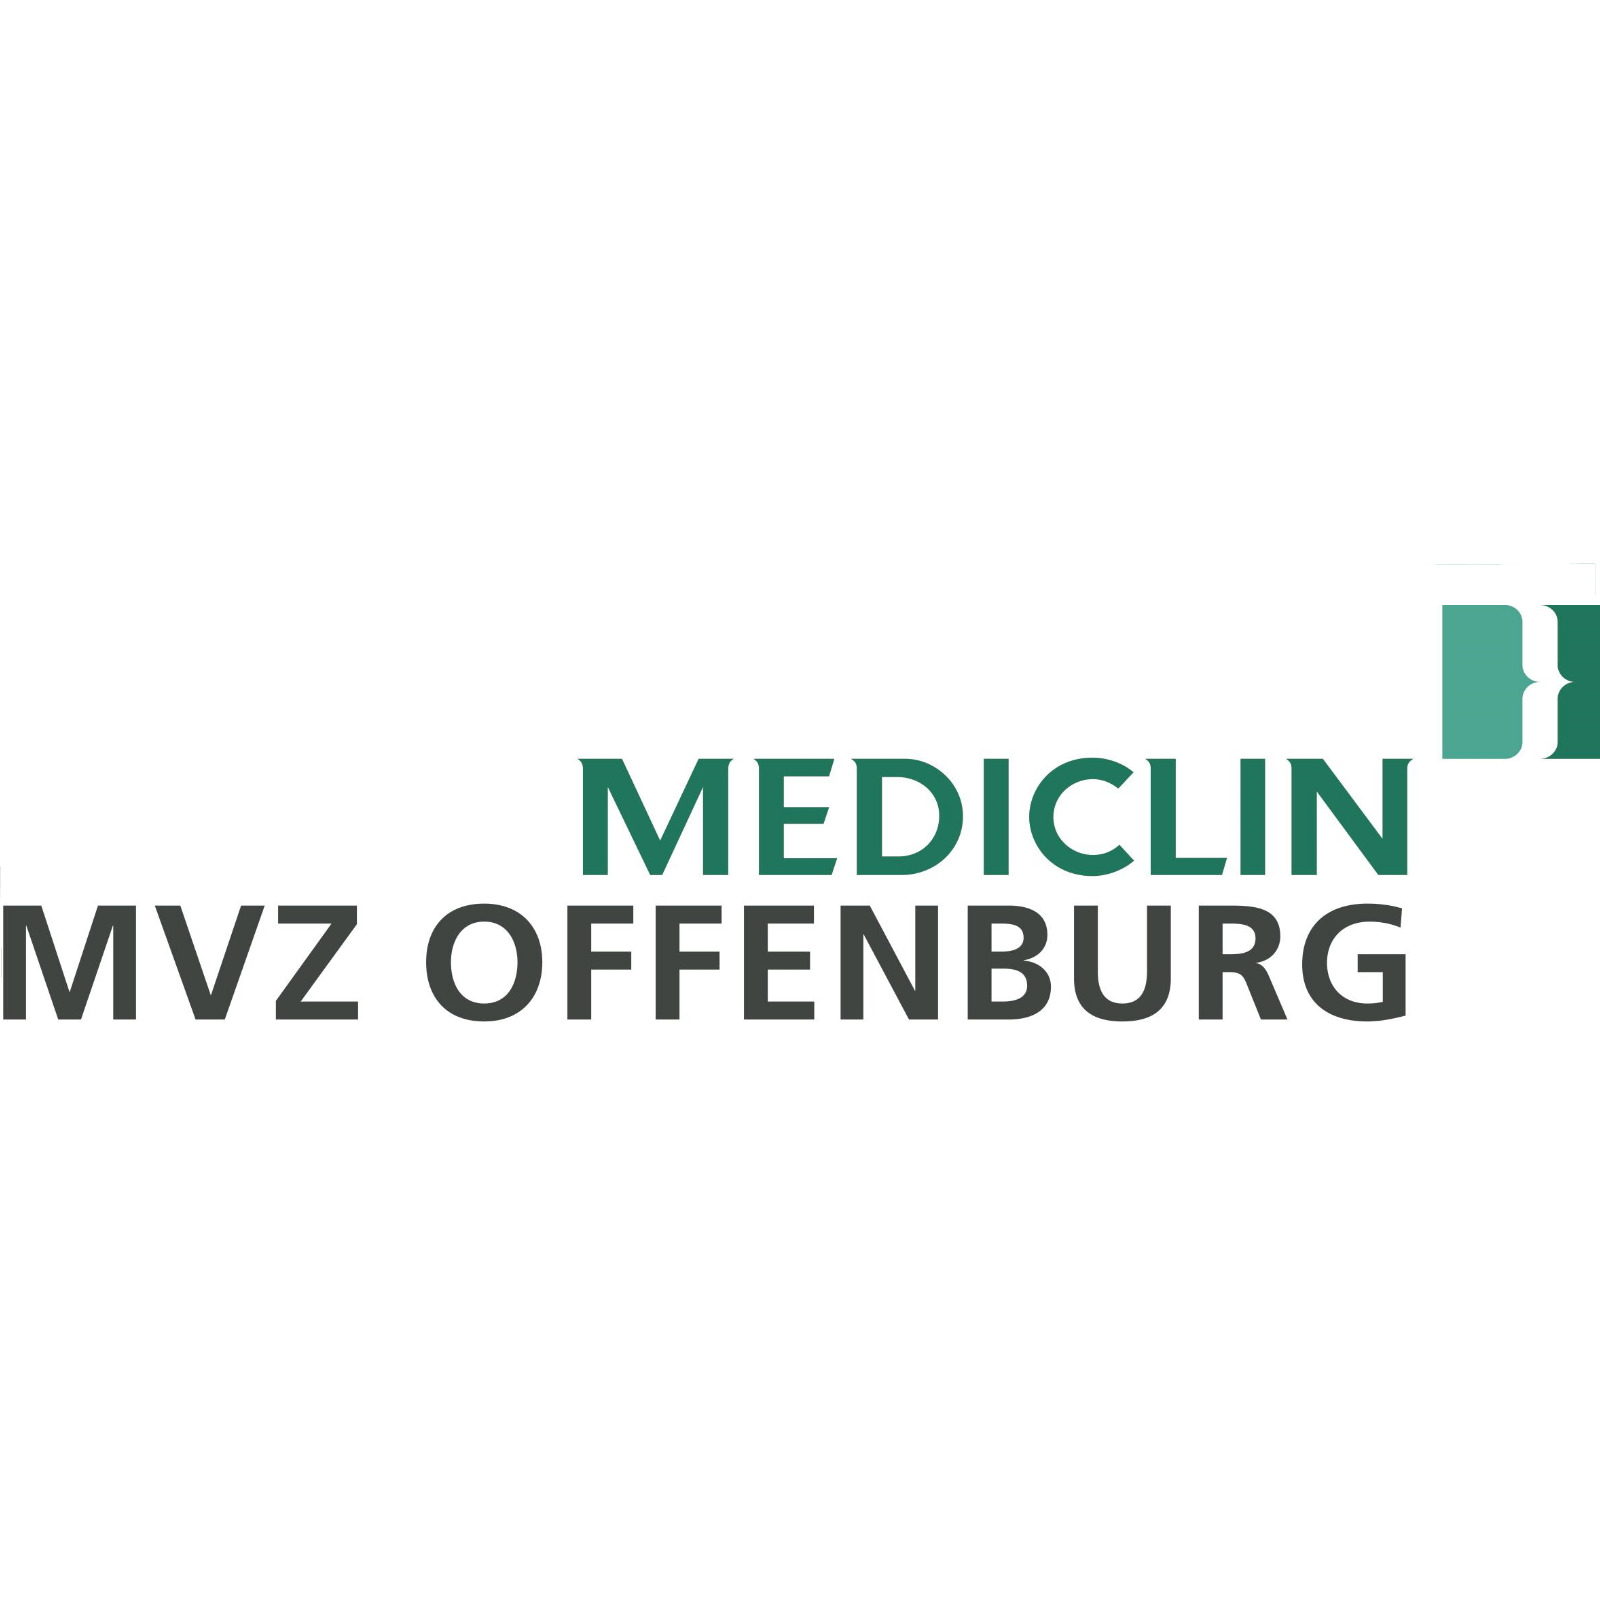 MEDICLIN MVZ Offenburg in Offenburg - Logo